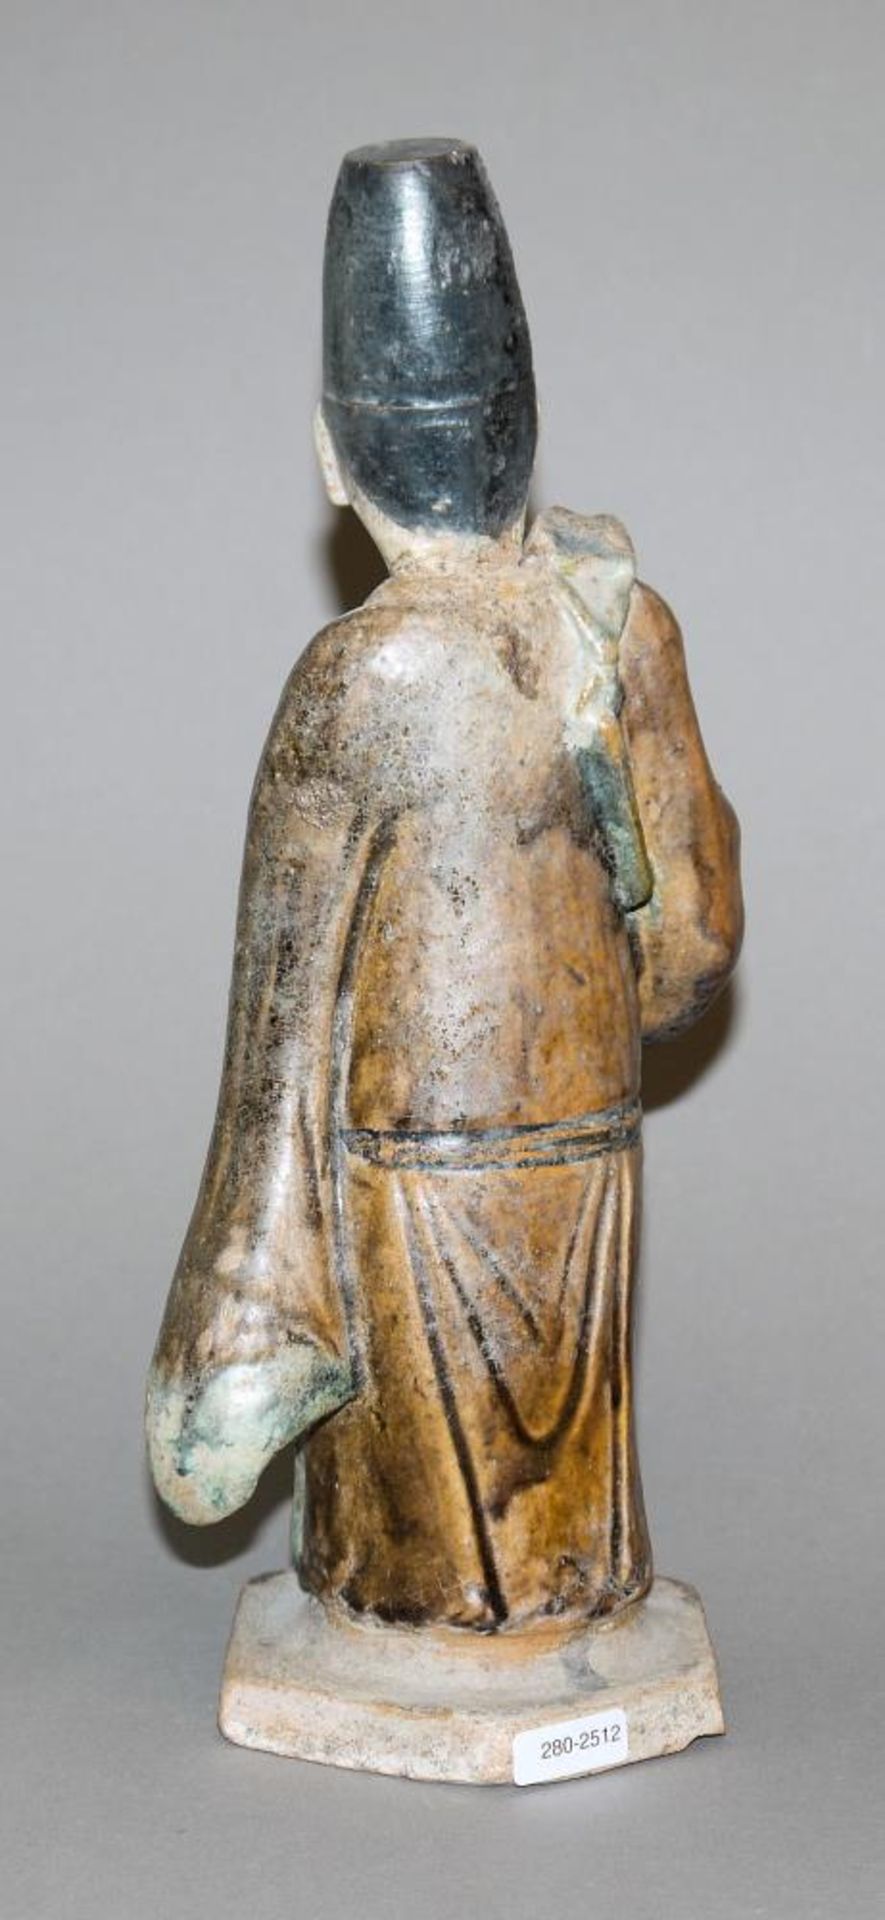 Mingqi-Figur in Sancai-Keramik, Ming-Zeit, China, ca. 15.-16. Jh. Grabfigur eines Musikers mit hoher - Image 2 of 3